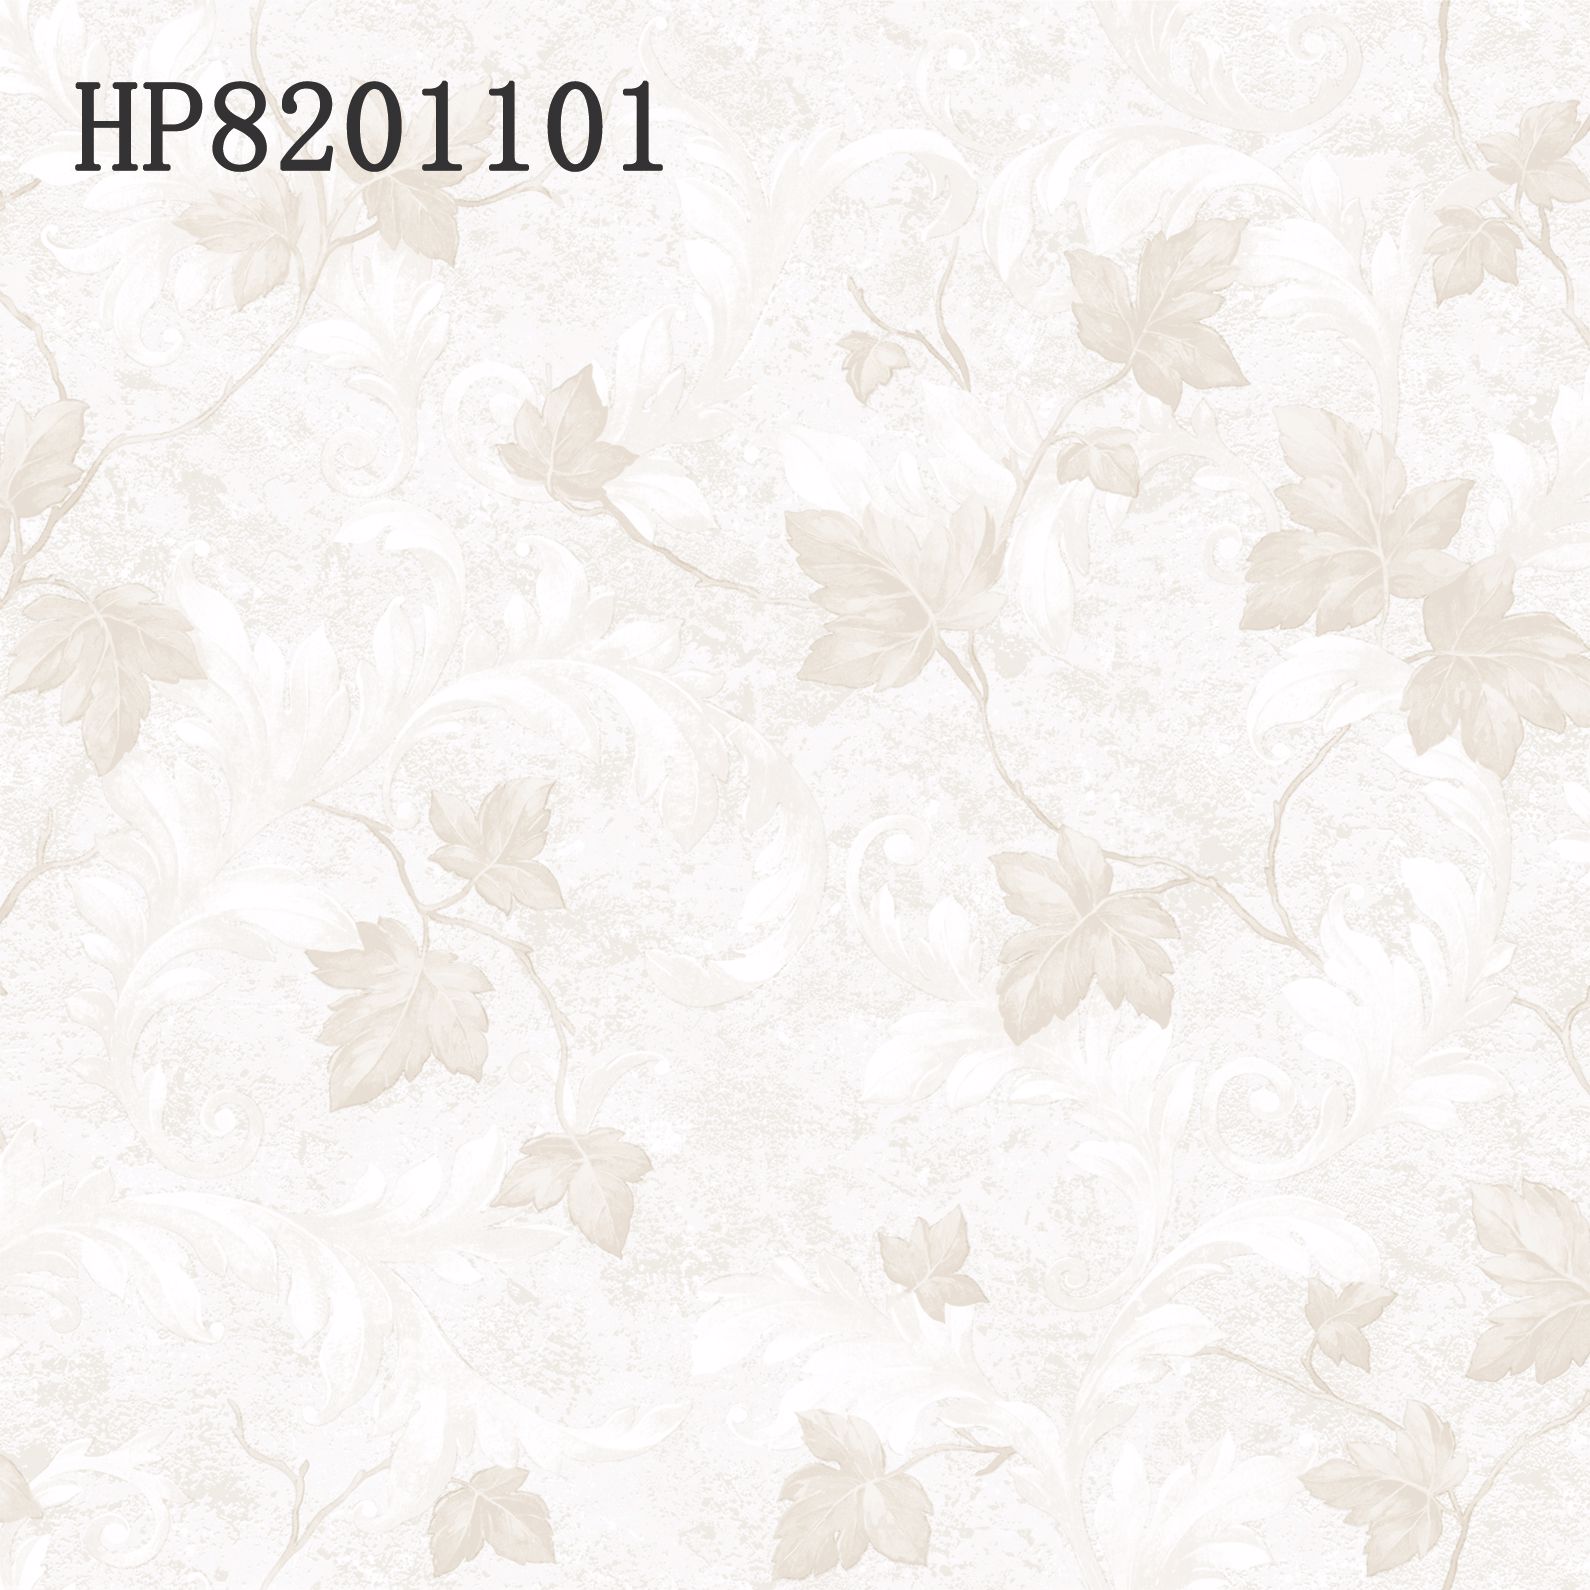 Environment-friendly Pvc Wallpapers HP82001101